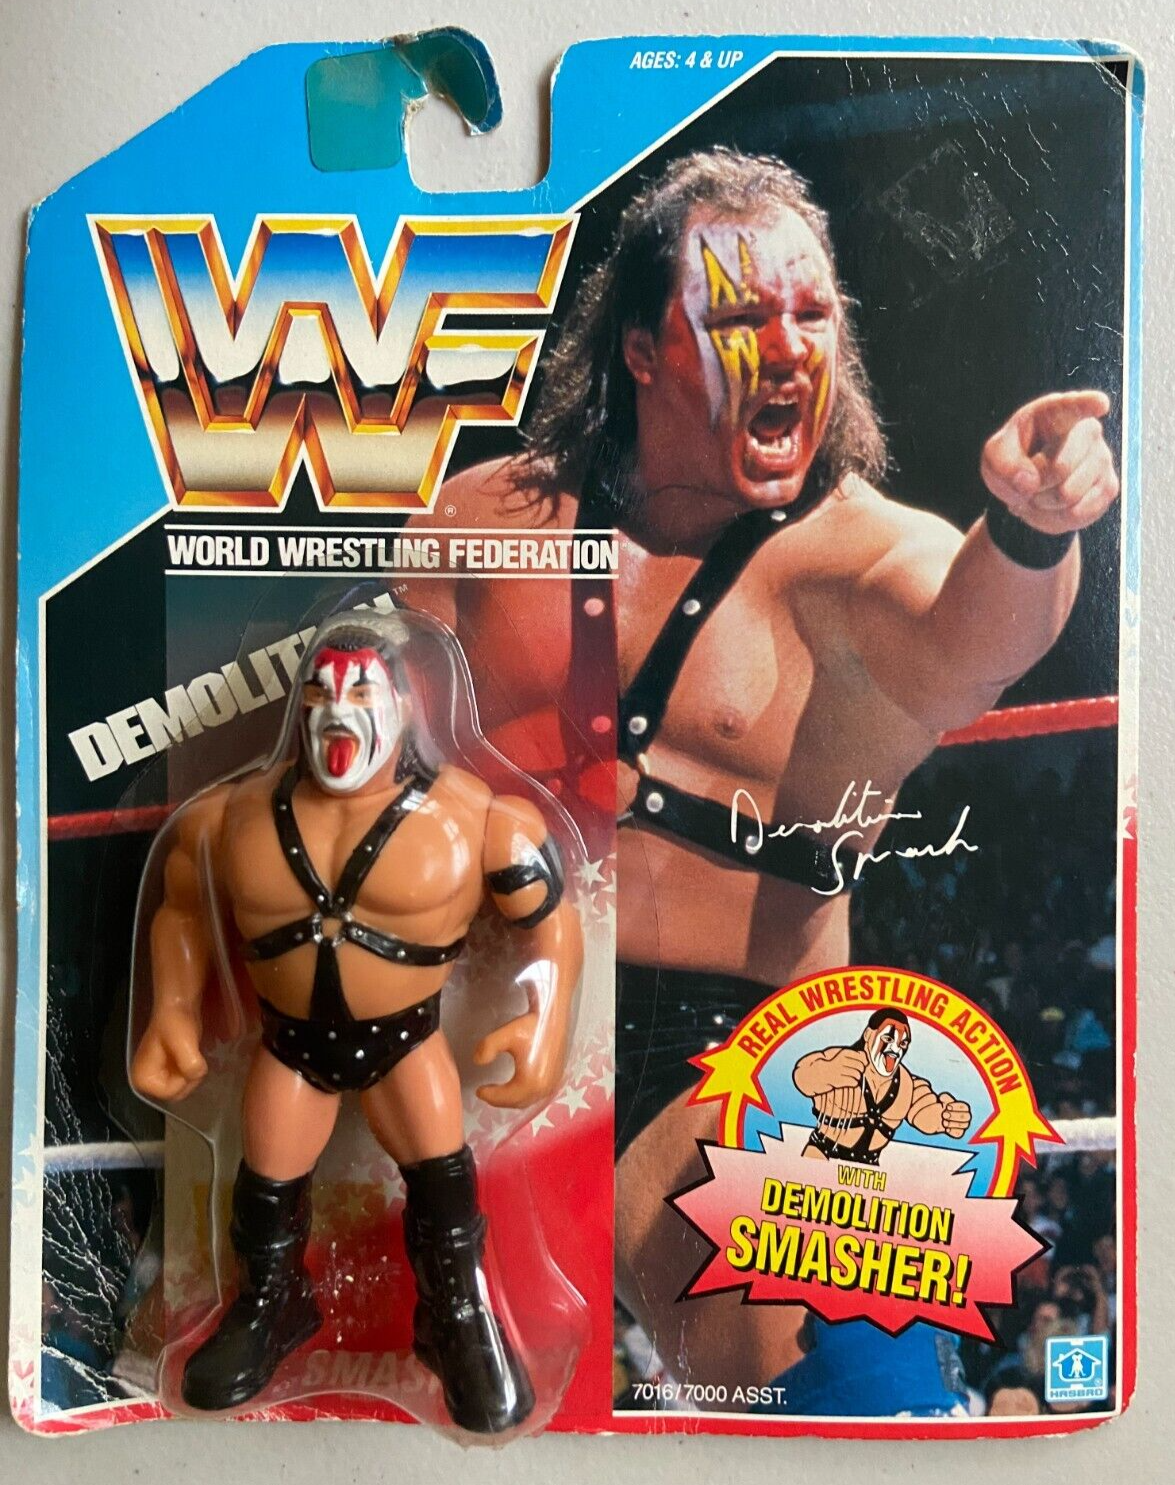 1990 WWF Hasbro Series 1 Smash with Demolition Smasher 